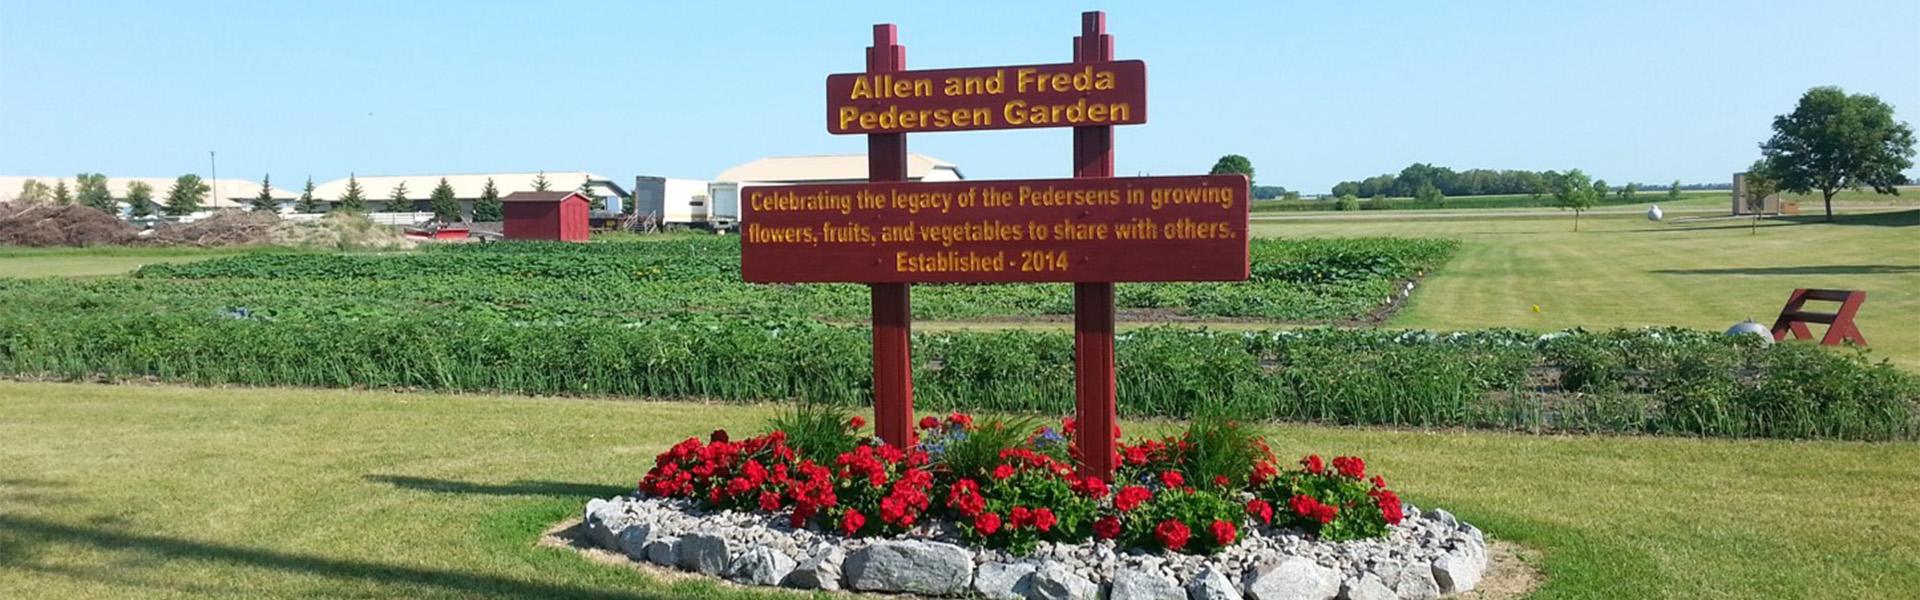 Allen and Freda Pedersen Garden sign and view of the garden in 2017